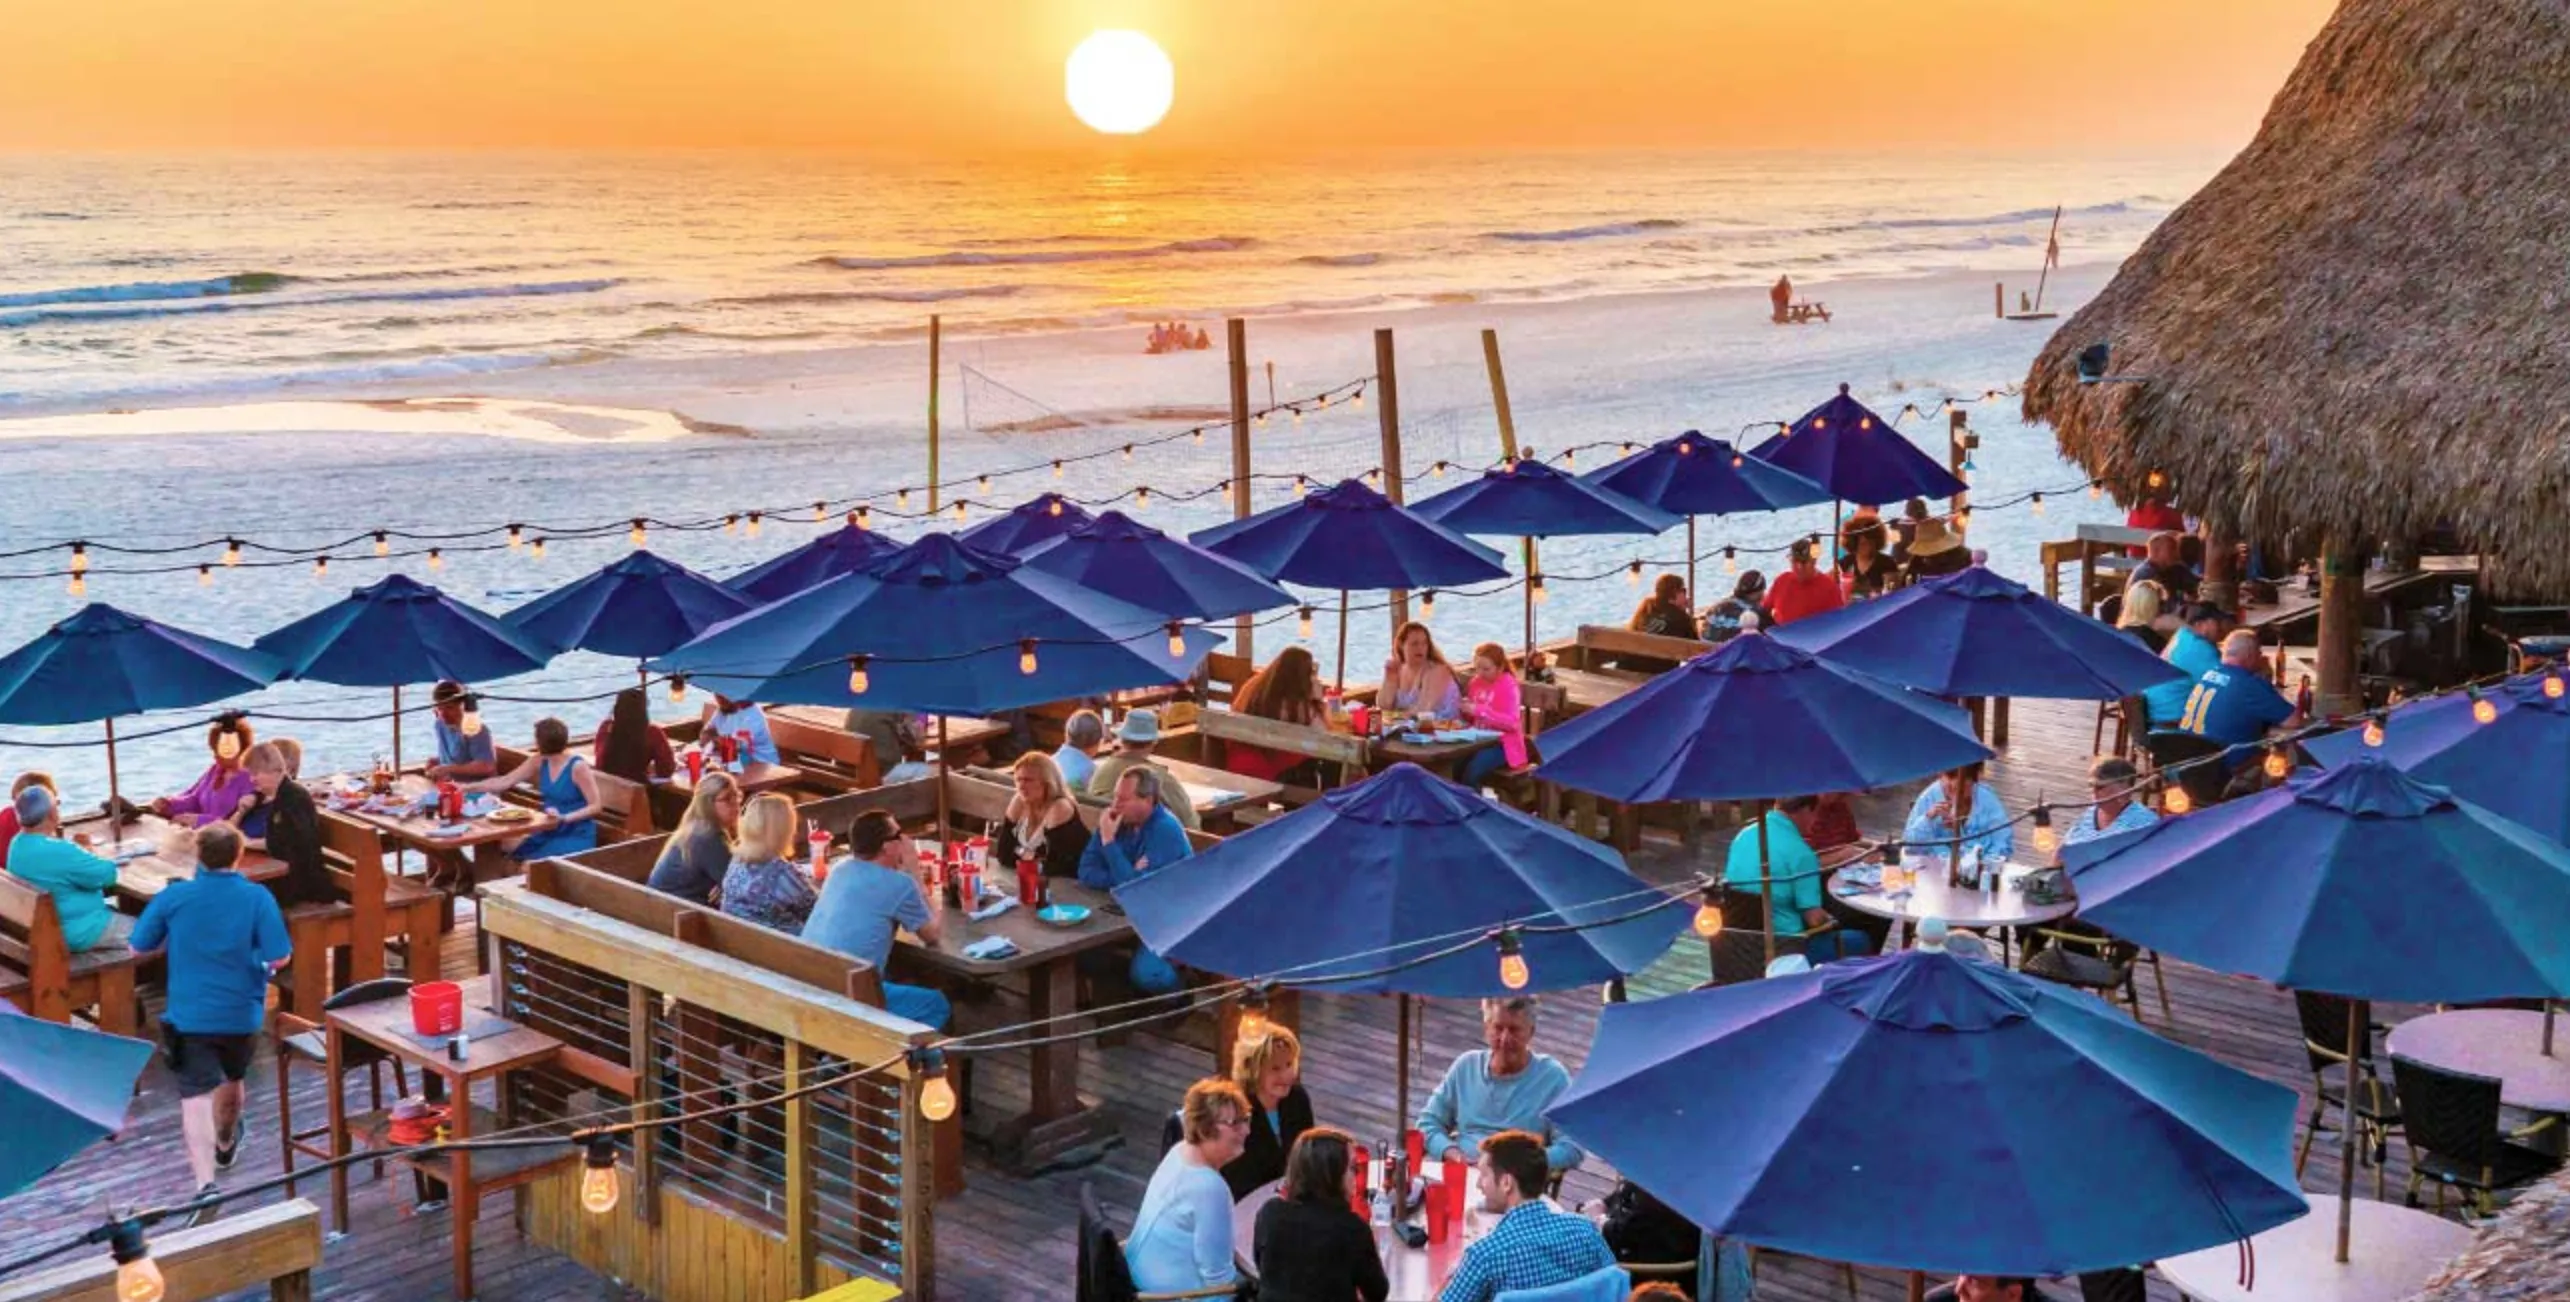 Sharky's Beachfront Restaurant in Panama, North America | Restaurants - Rated 4.6